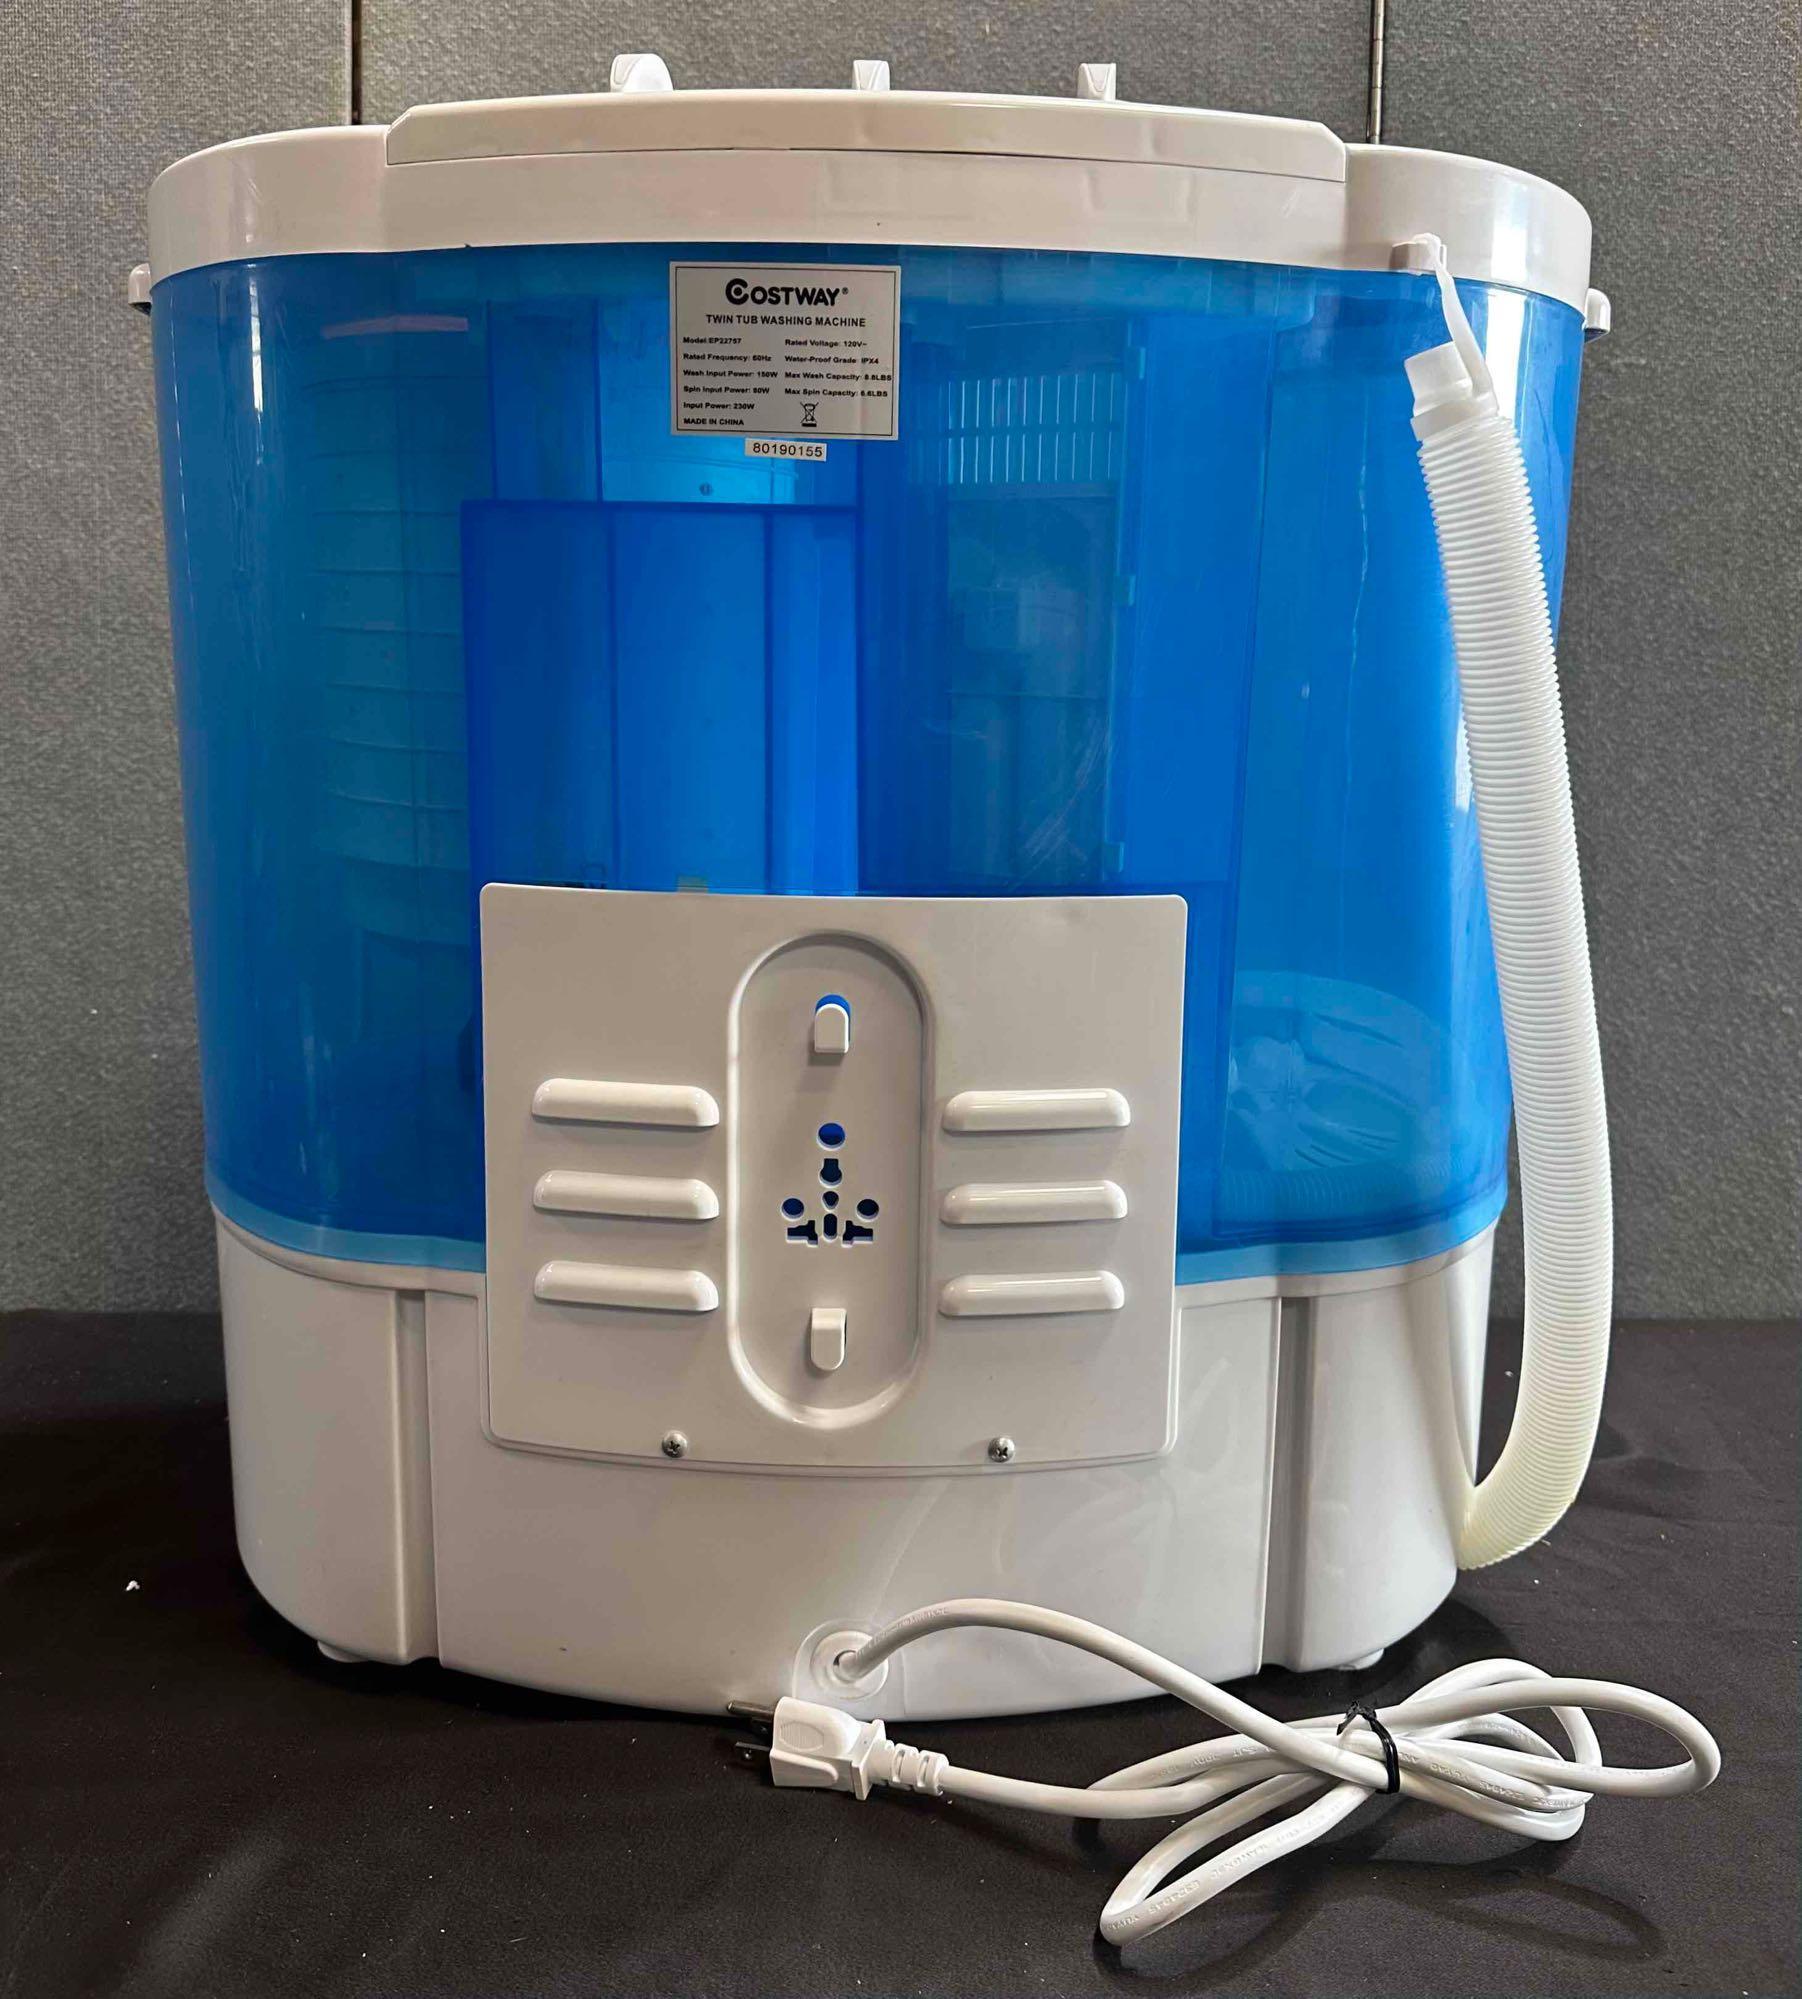 Twin Tub Mini Portable Washing Machine Small Washer - China